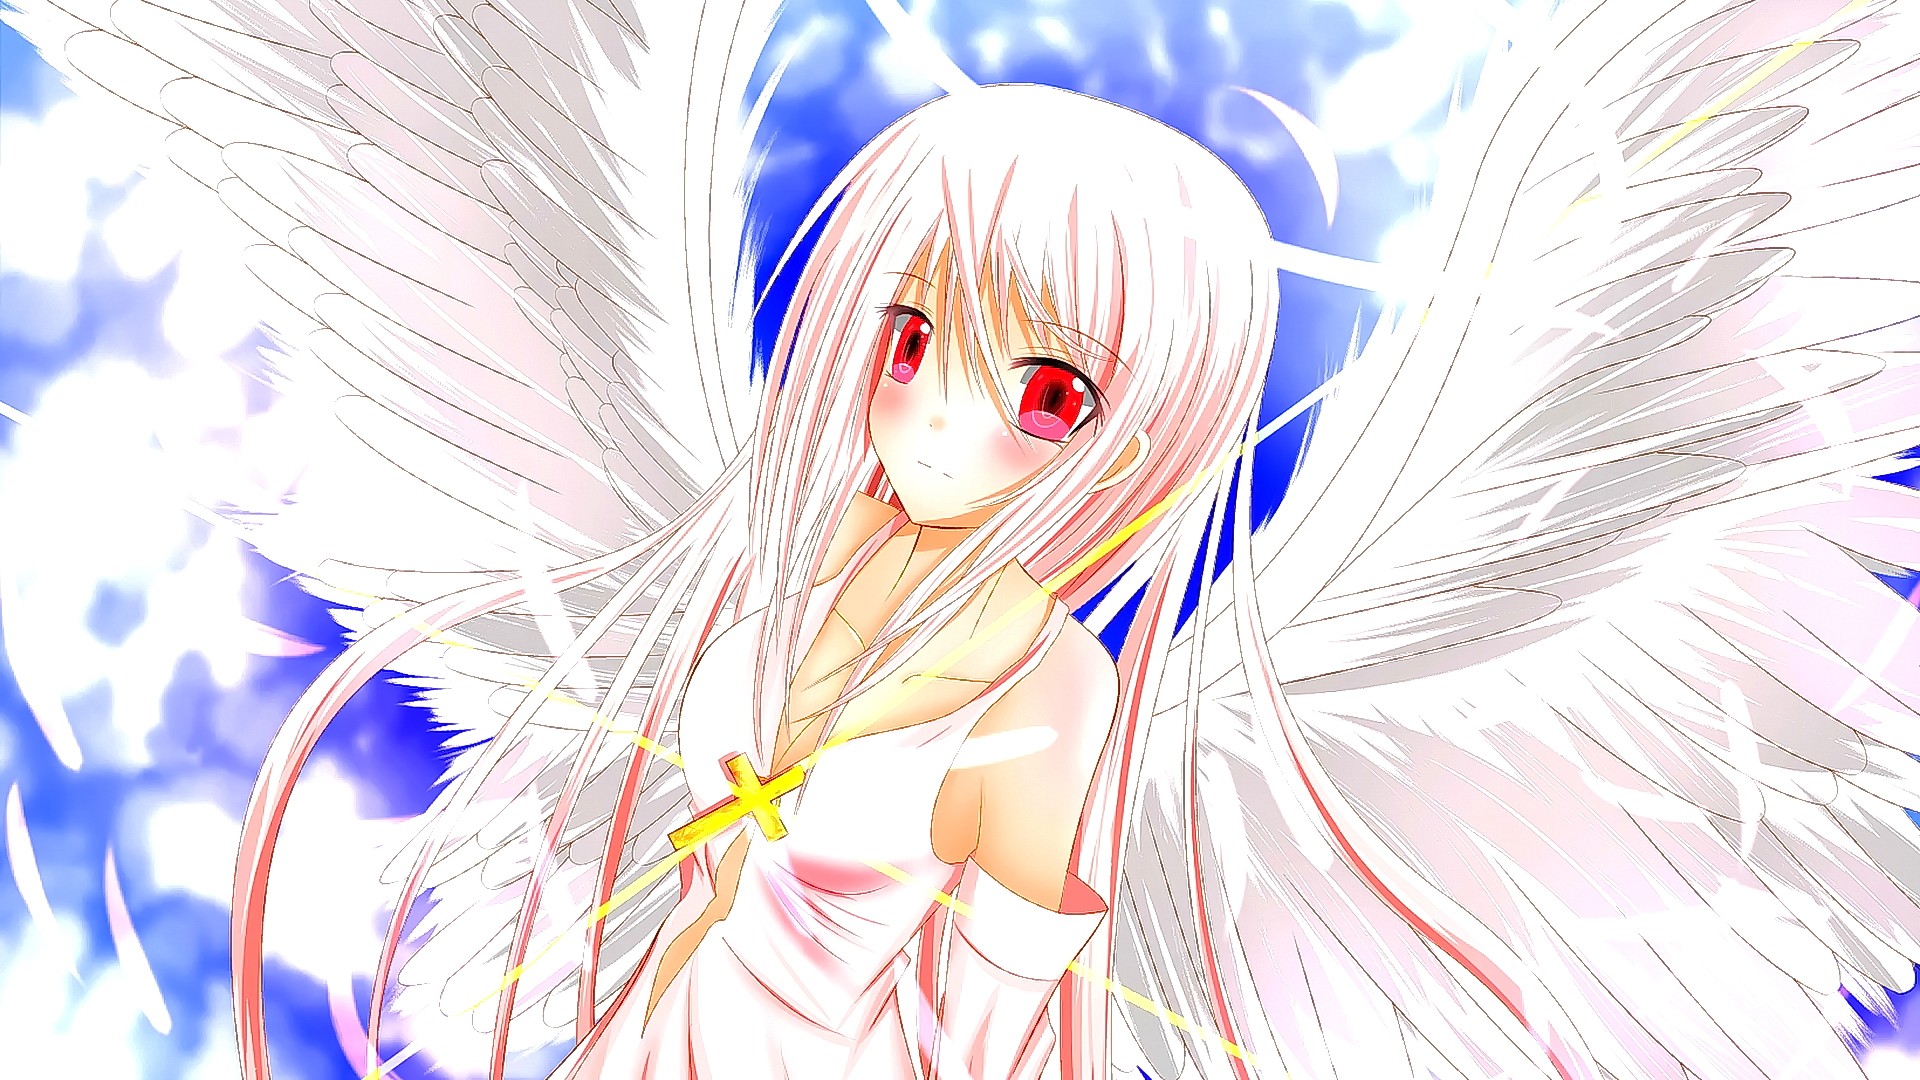 Anime 1920x1080 anime anime girls long hair red eyes smiling wings dress looking at viewer fantasy art fantasy girl